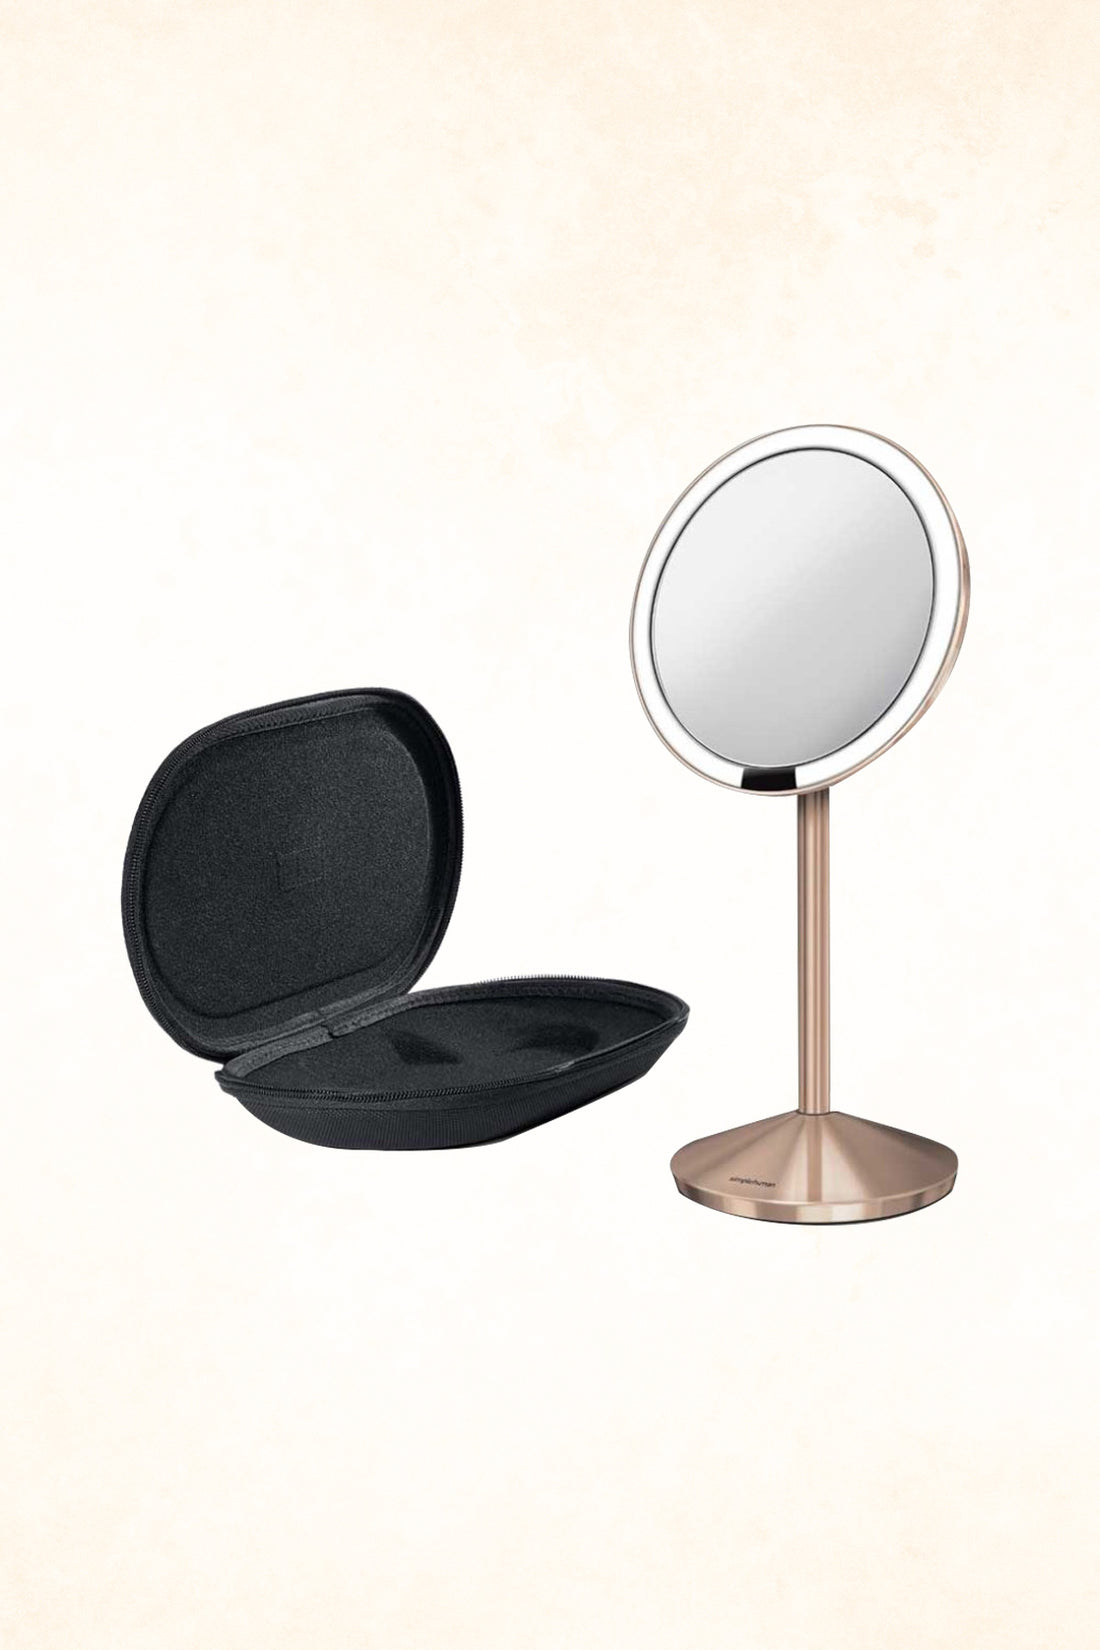 Simplehuman – 12cm sensor mirror - 10 x Magnification - Rechargeable - Travel Case - Rose Gold